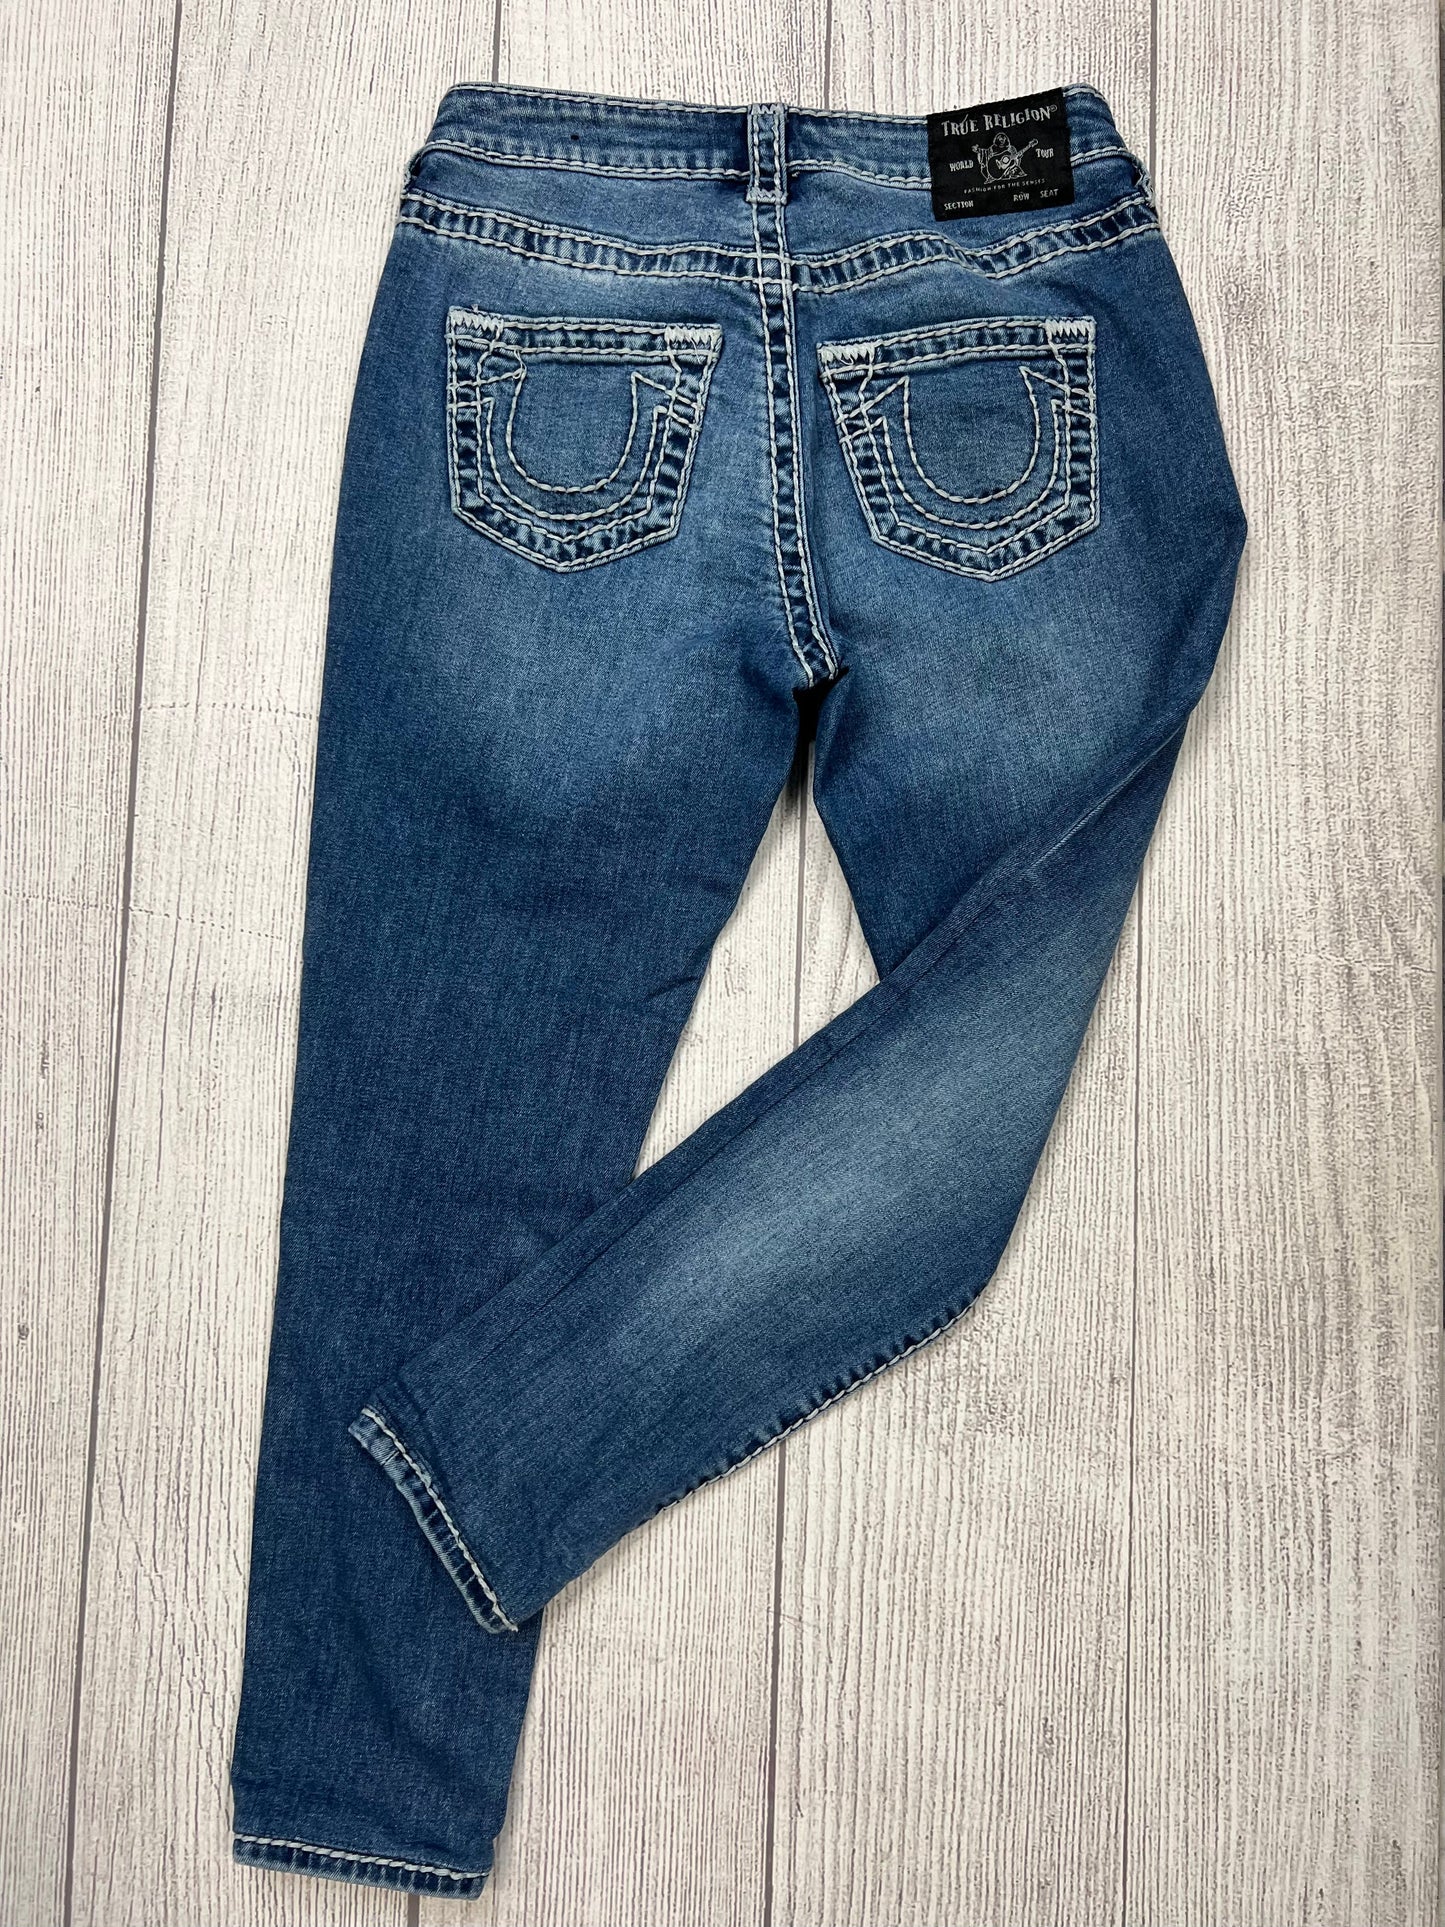 Denim Jeans Designer True Religion, Size 4